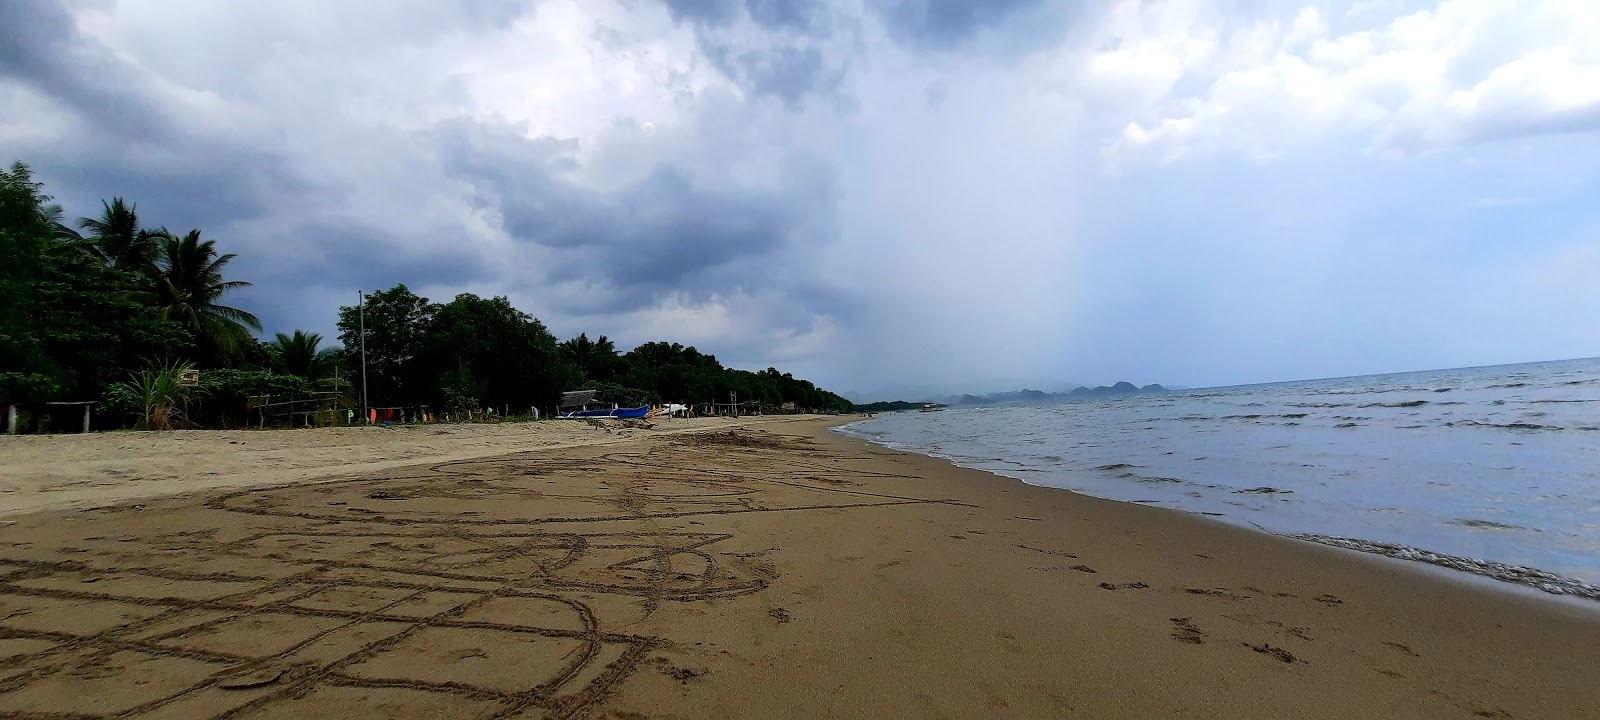 Foto di Nauhang Beach con una superficie del sabbia luminosa